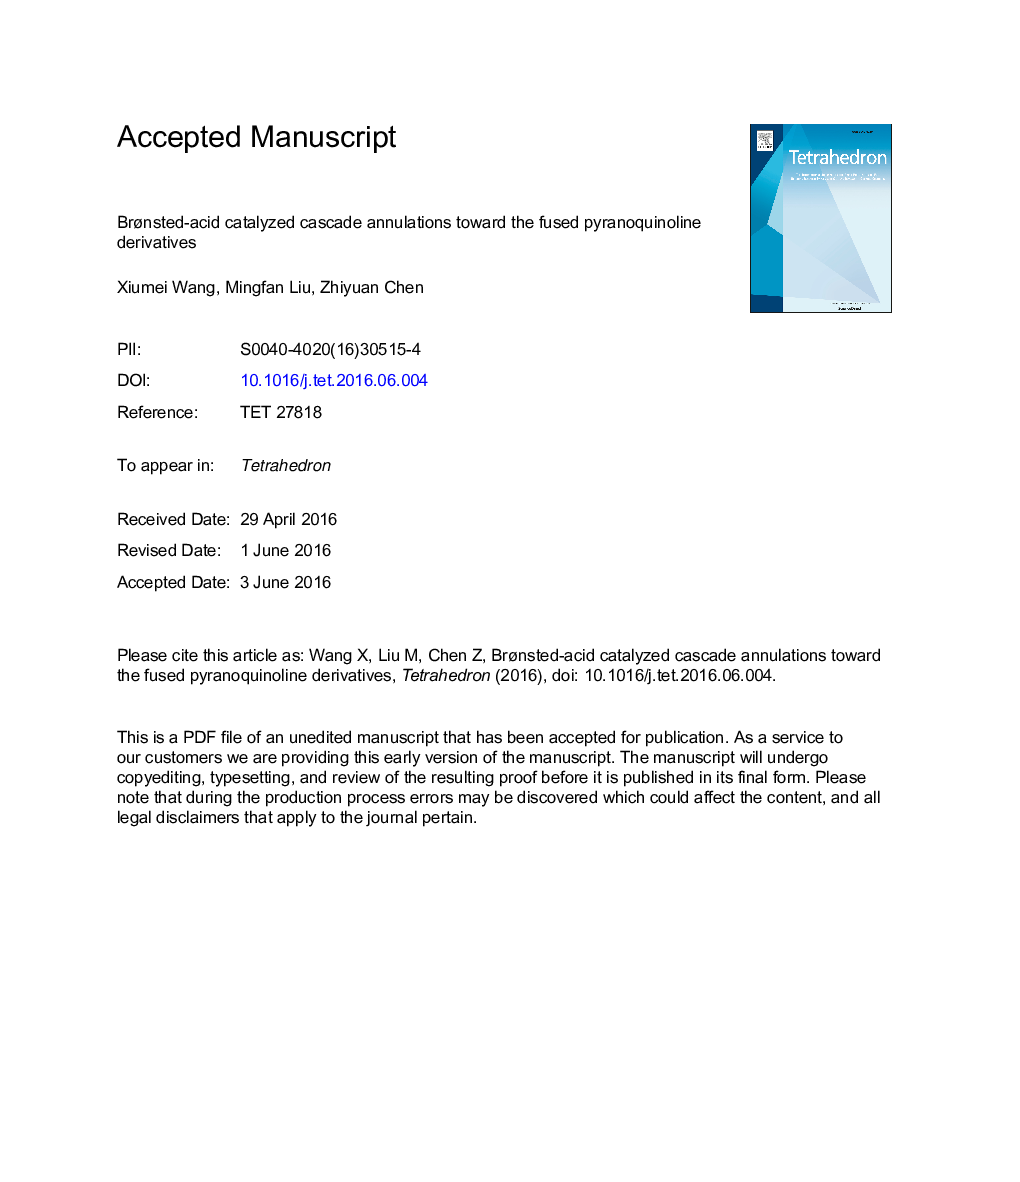 BrÃ¸nsted-acid catalyzed cascade annulations toward the fused pyranoquinoline derivatives